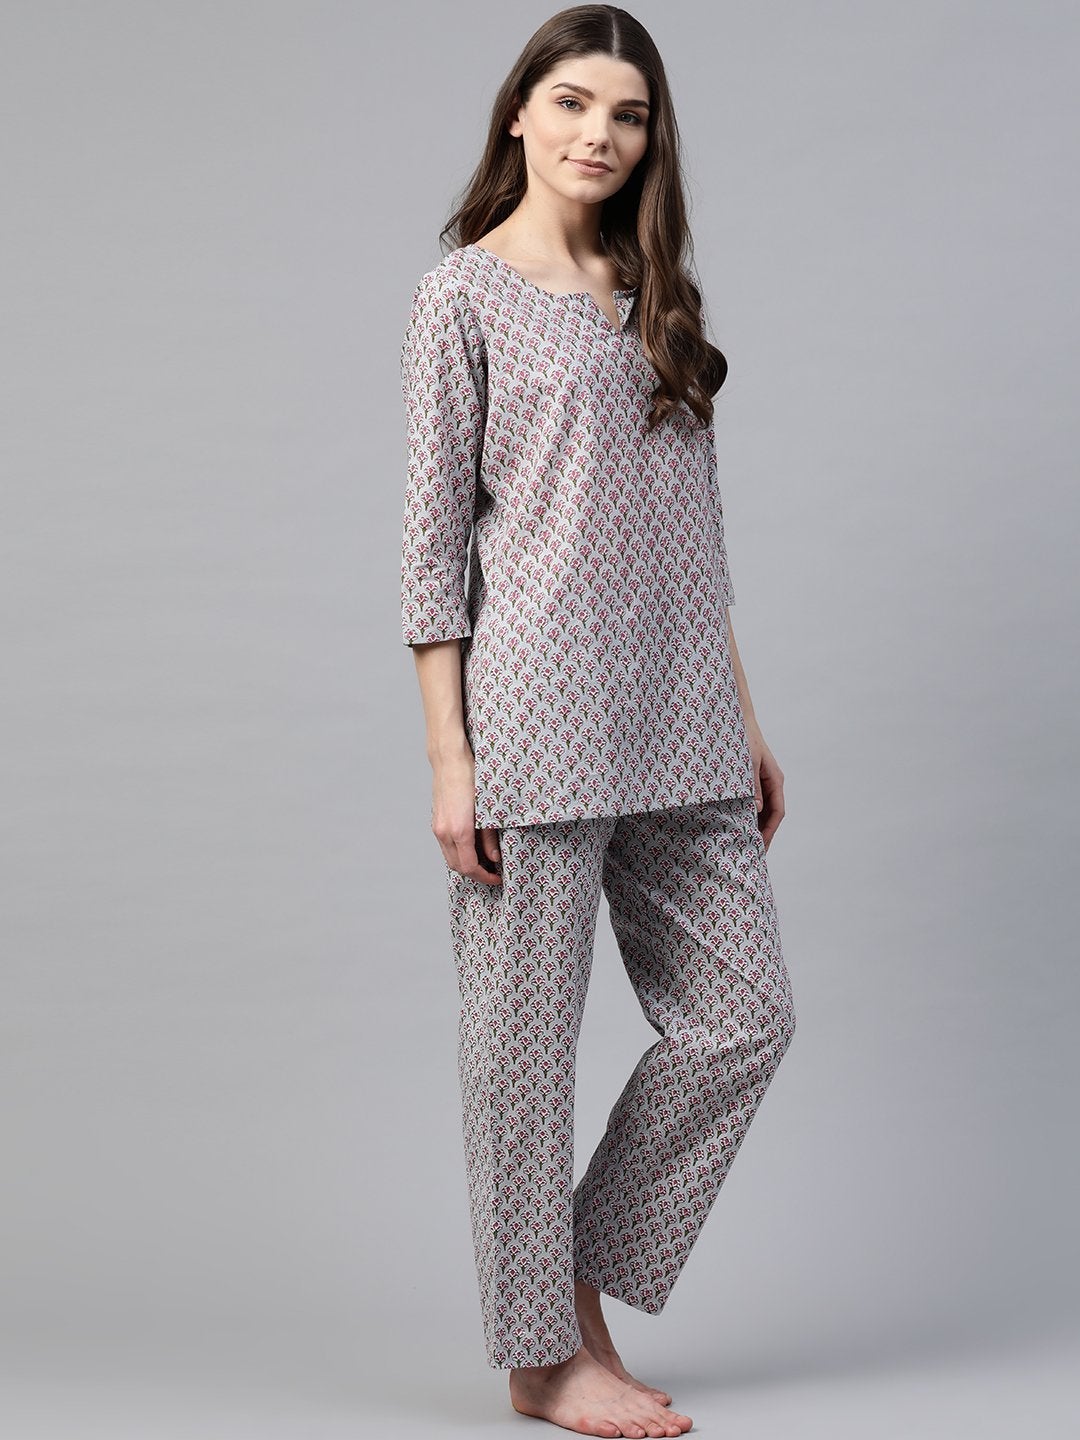 Women's Grey Printed Loungewear/Nightwear - Noz2Toz